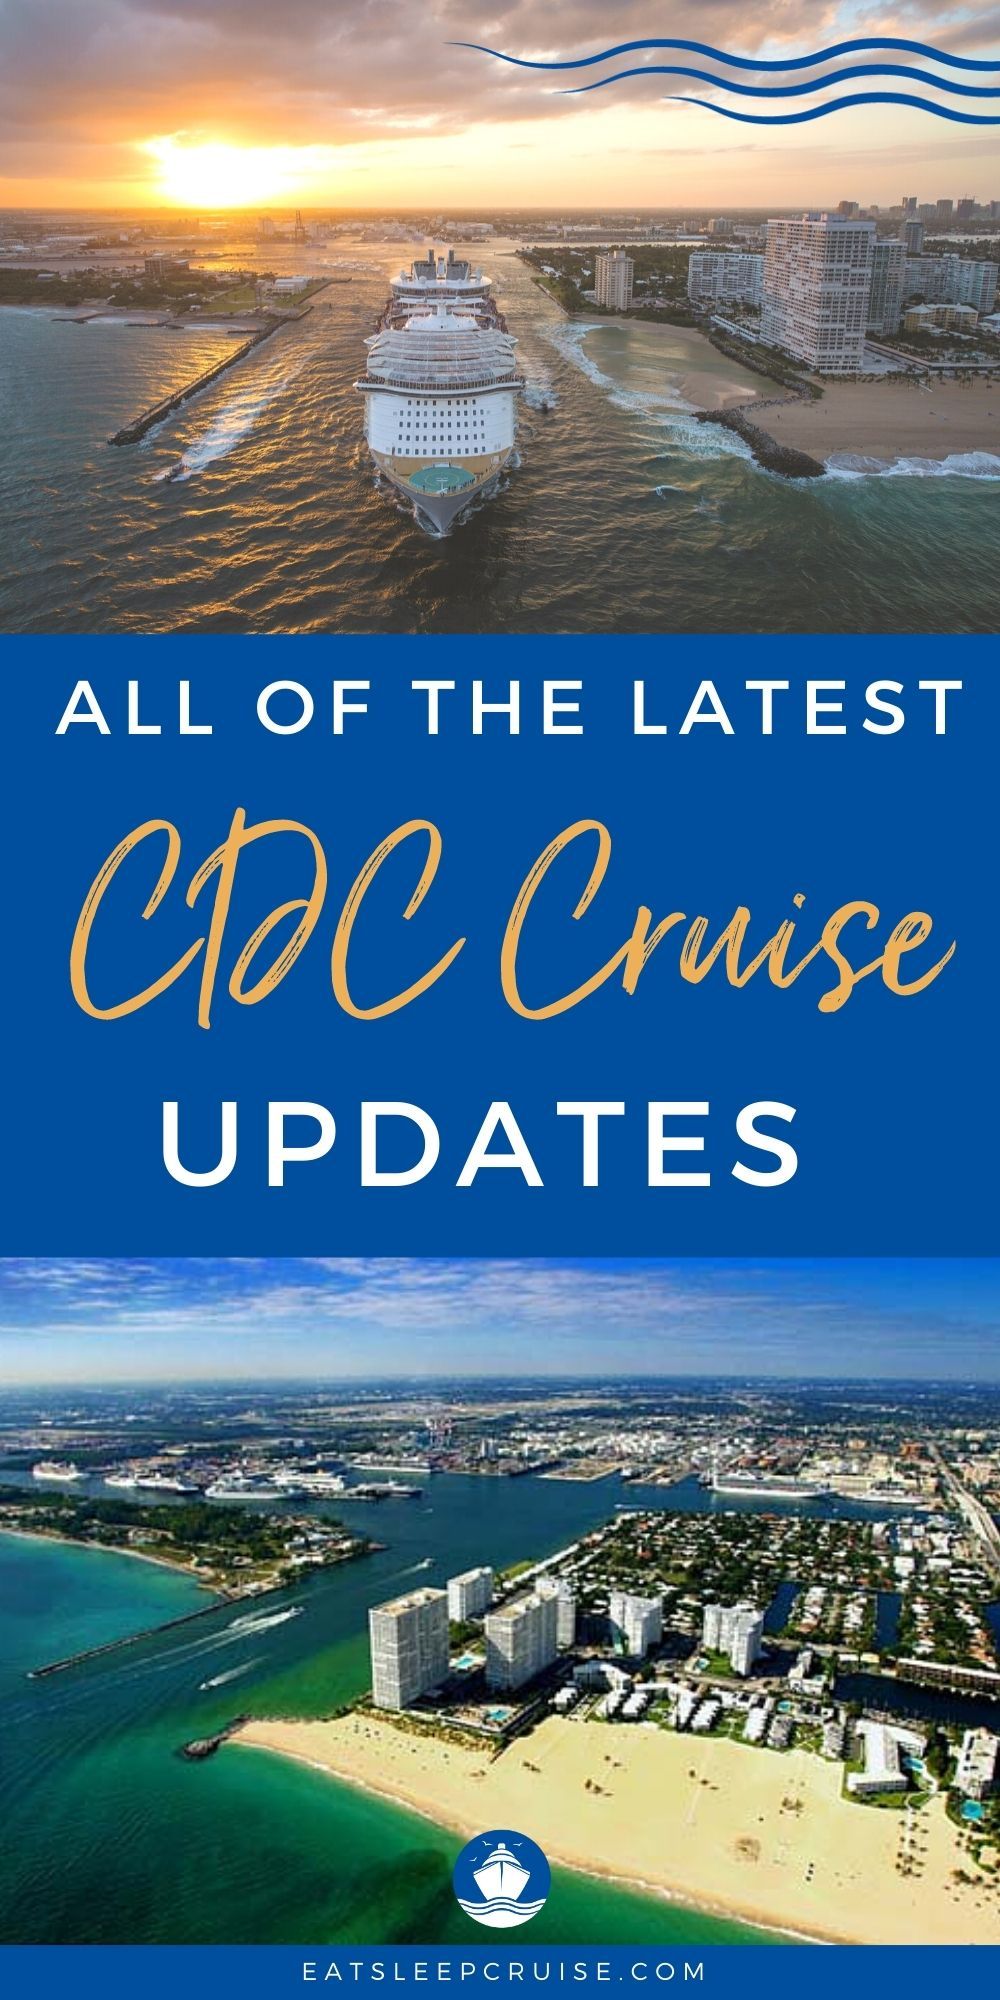 Latest CDC Cruise Updates